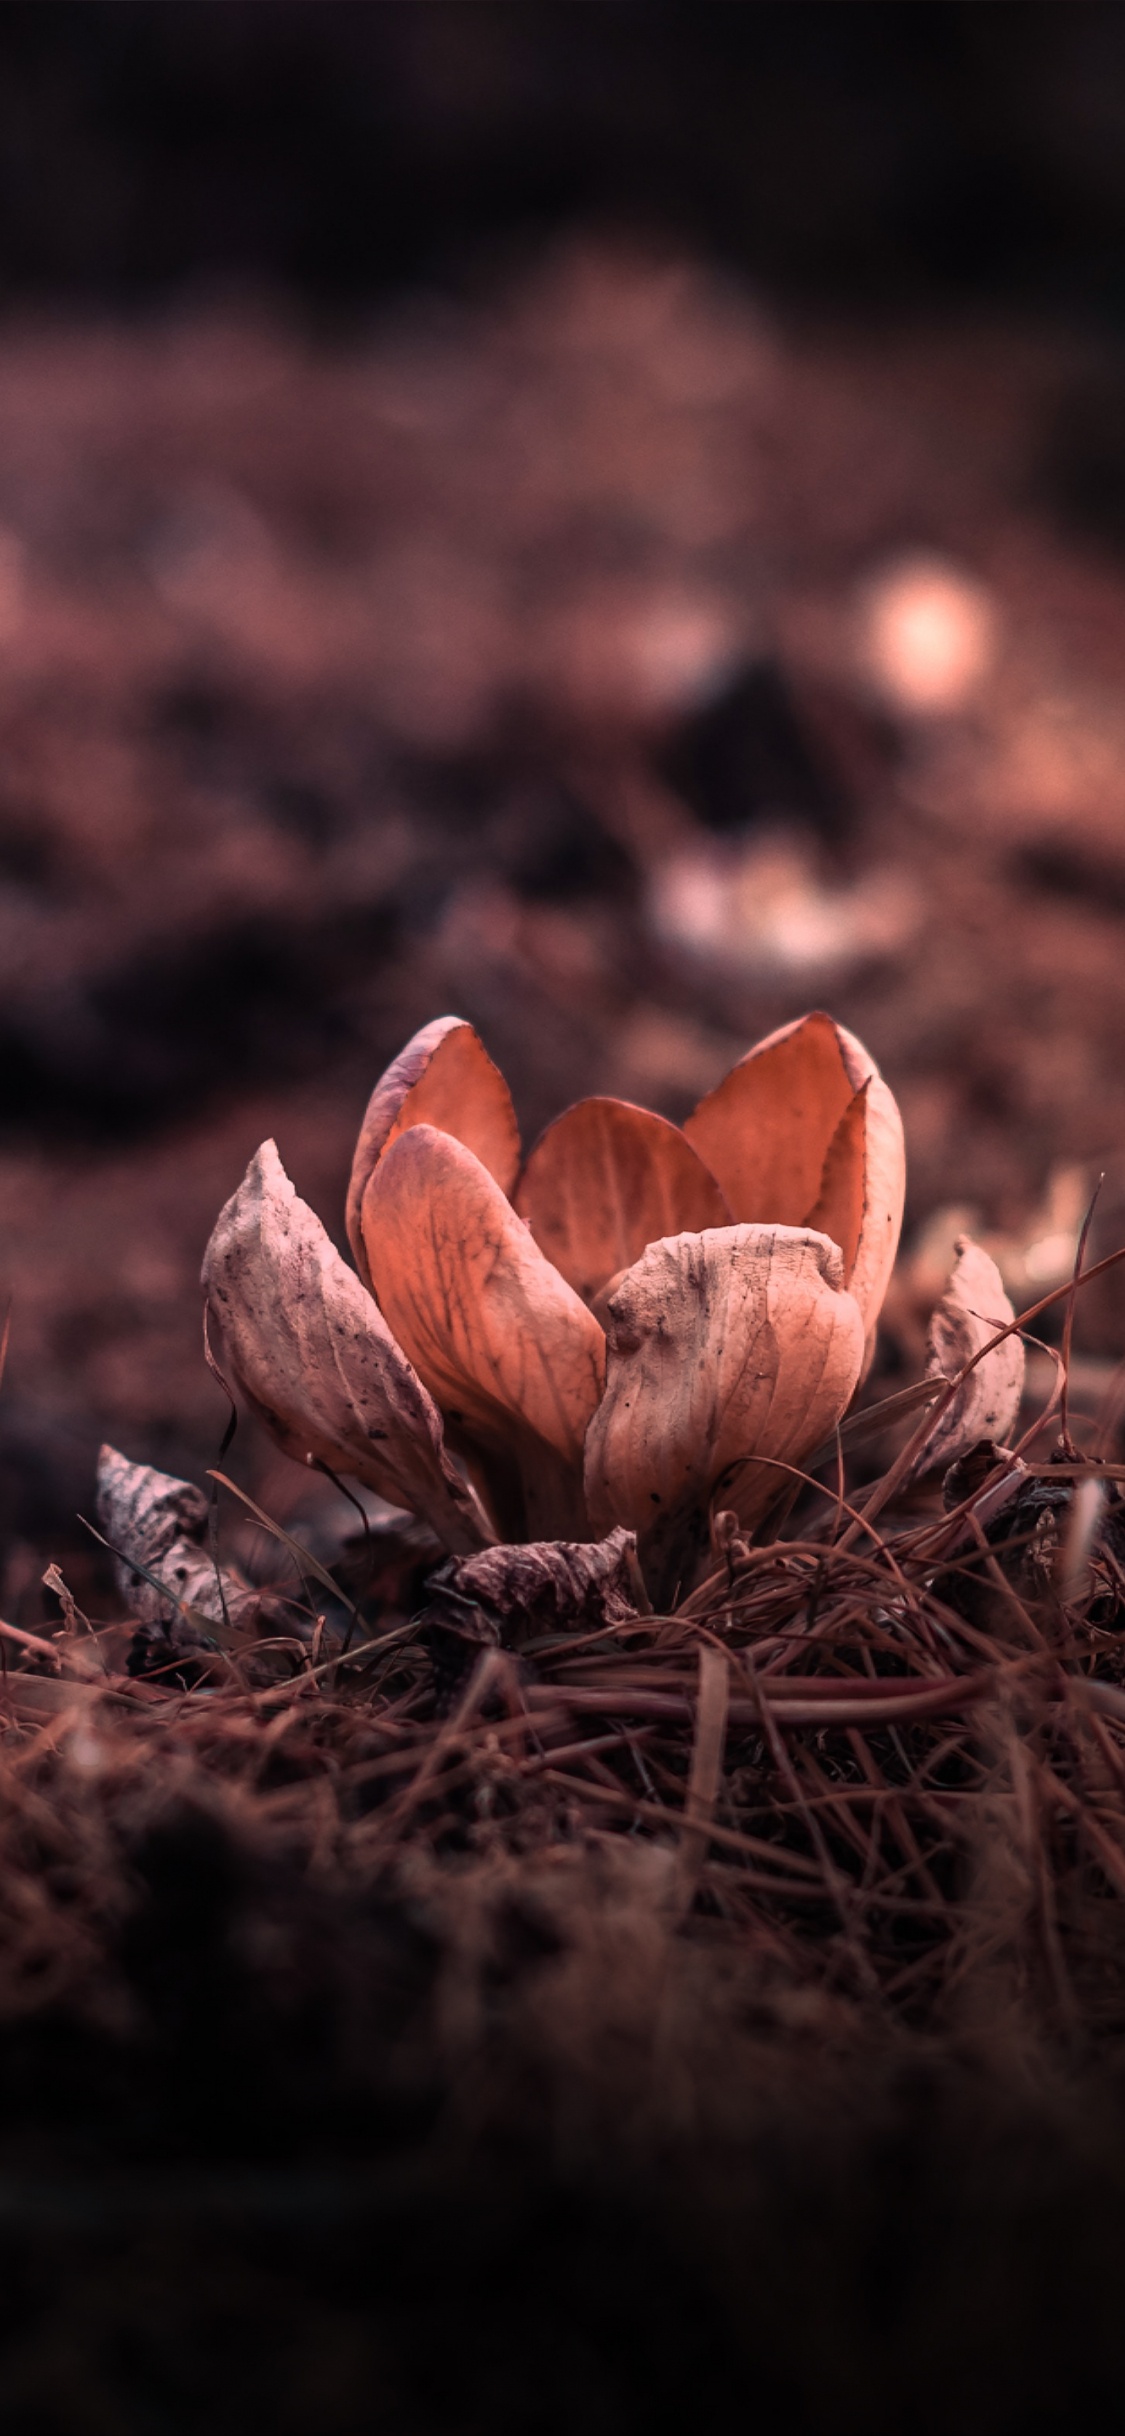 Brown Mushrooms on Brown Dried Leaves. Wallpaper in 1125x2436 Resolution